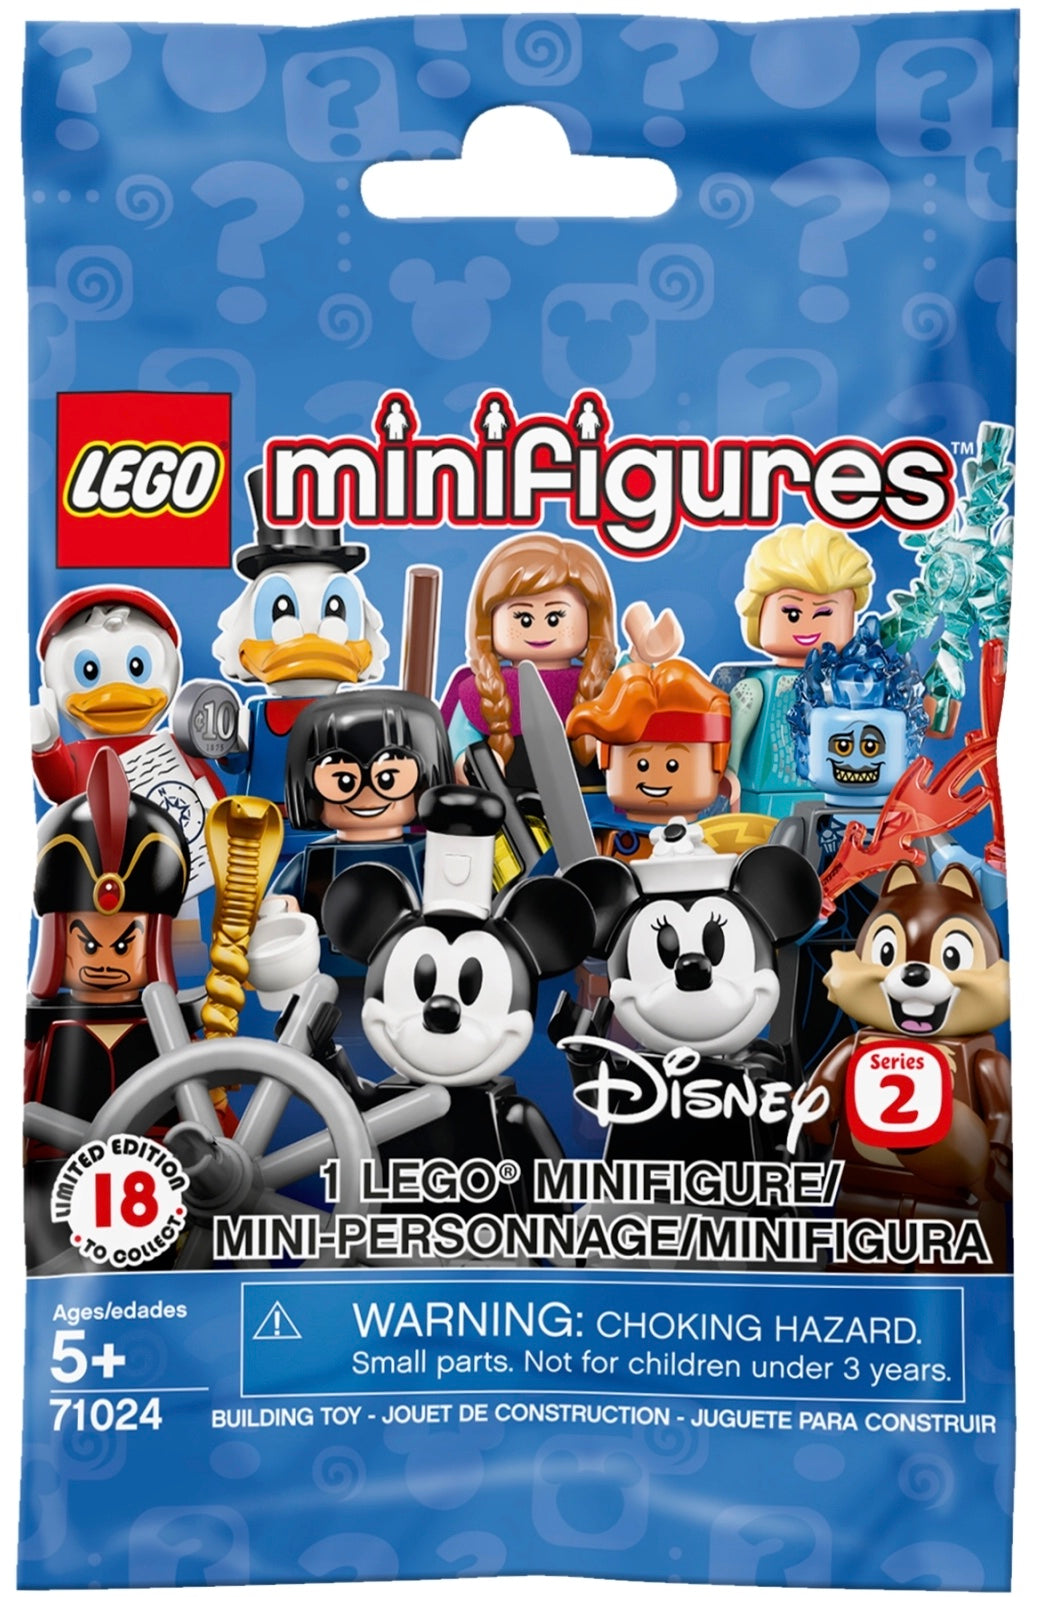 LEGO Disney Series 2 Limited Edition Dale Minifigure 71024